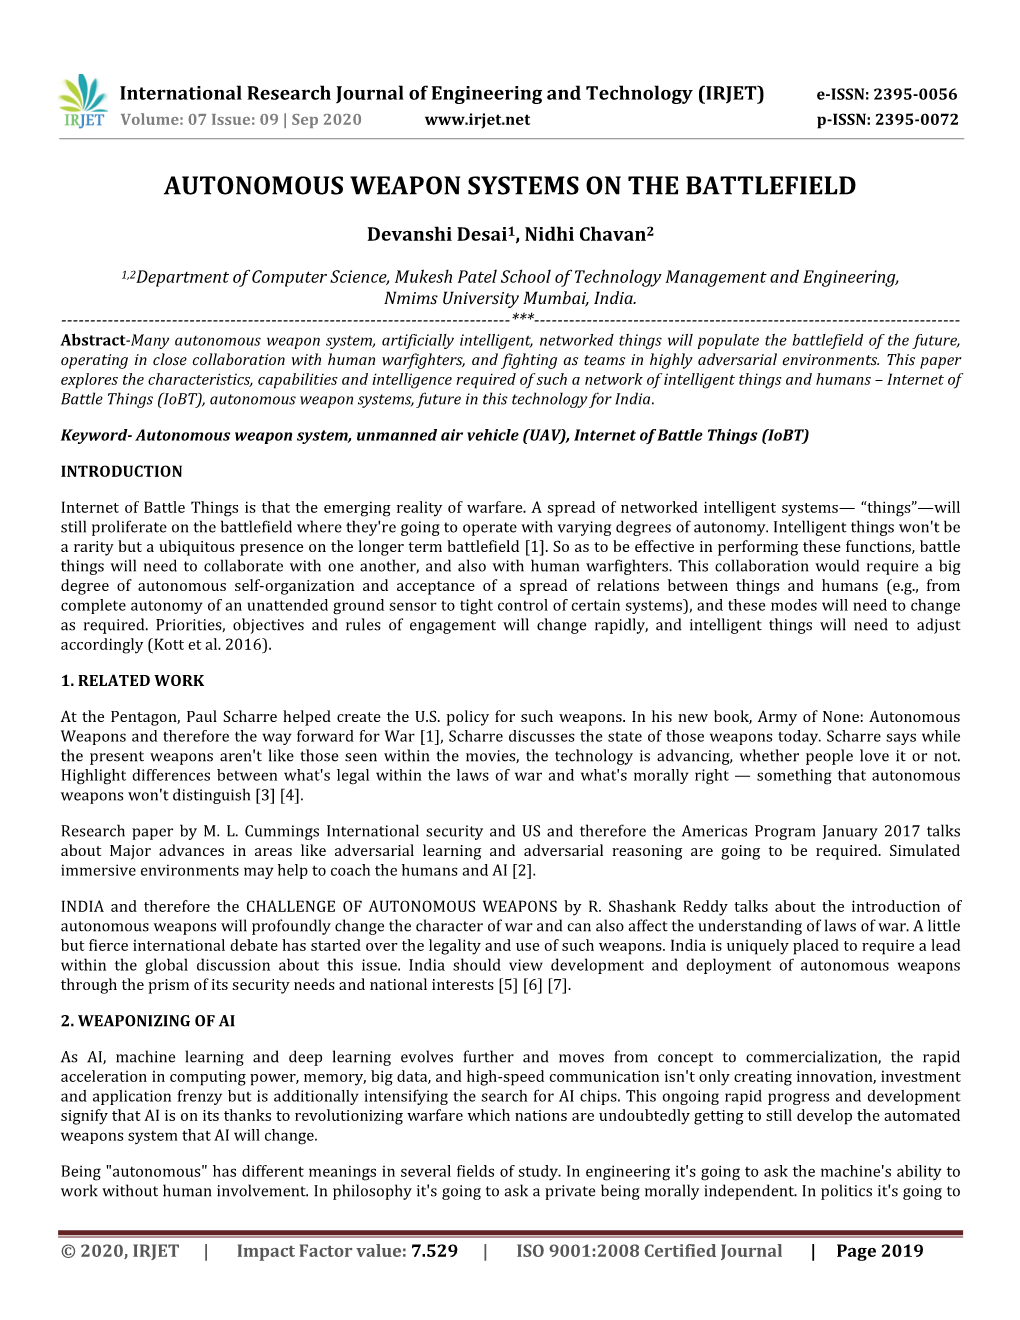 Autonomous Weapon Systems on the Battlefield